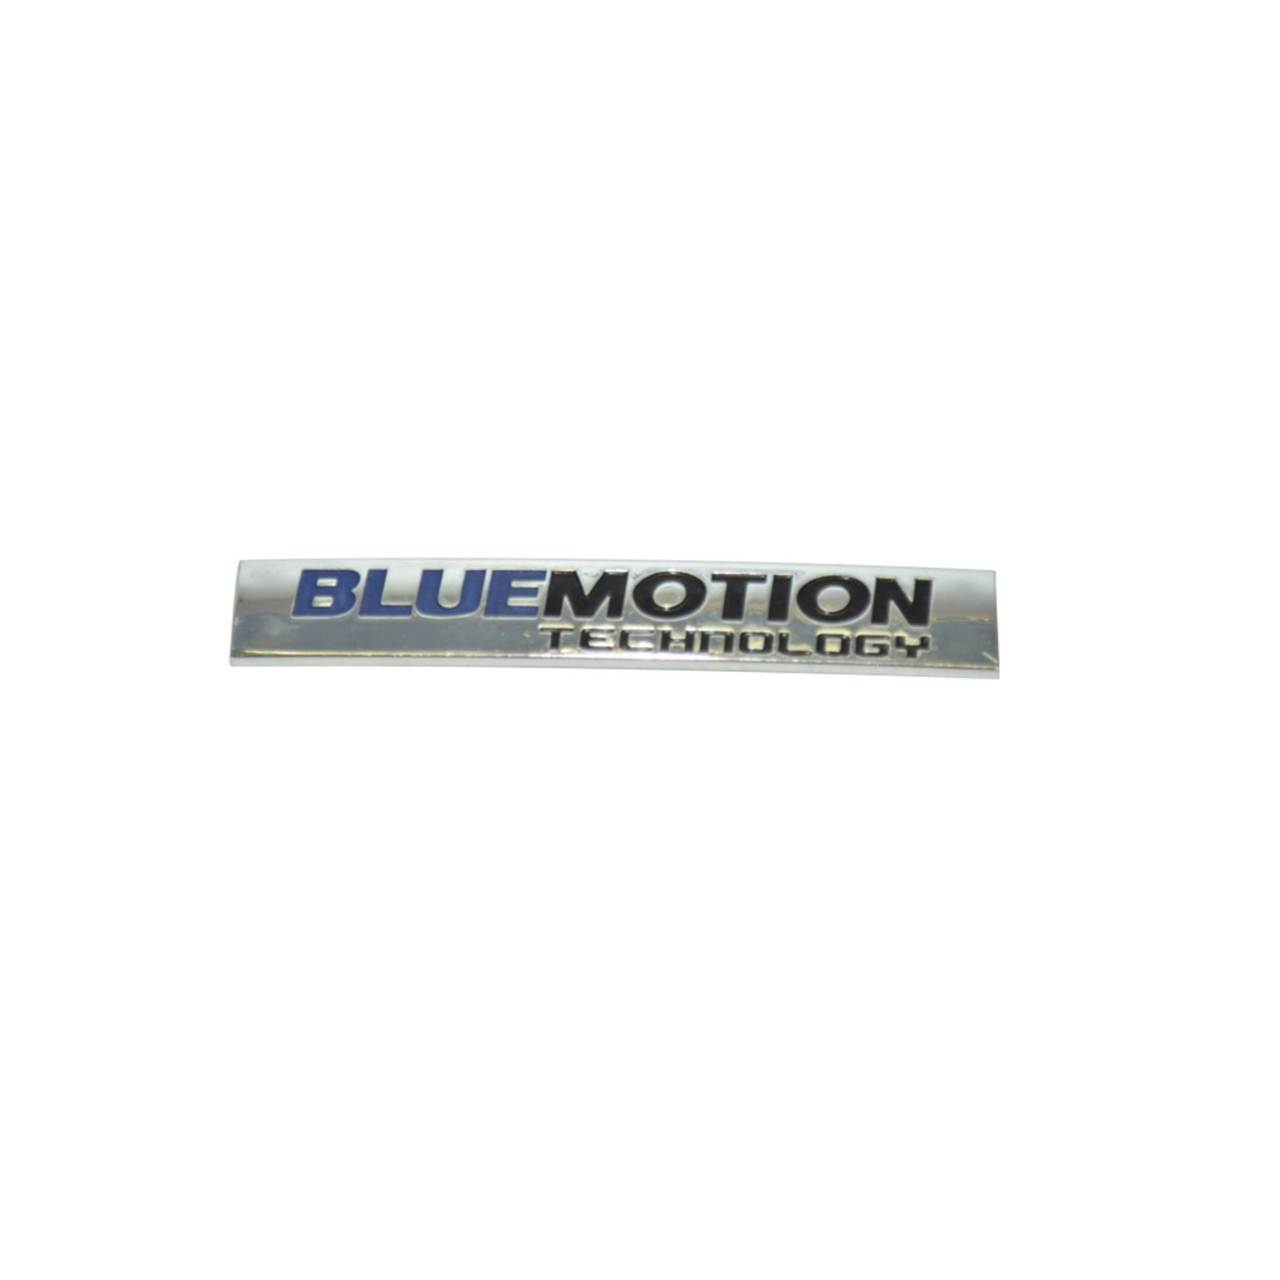 Yazı - Bluemotion Technology - Tiguan - 2008 - 2011